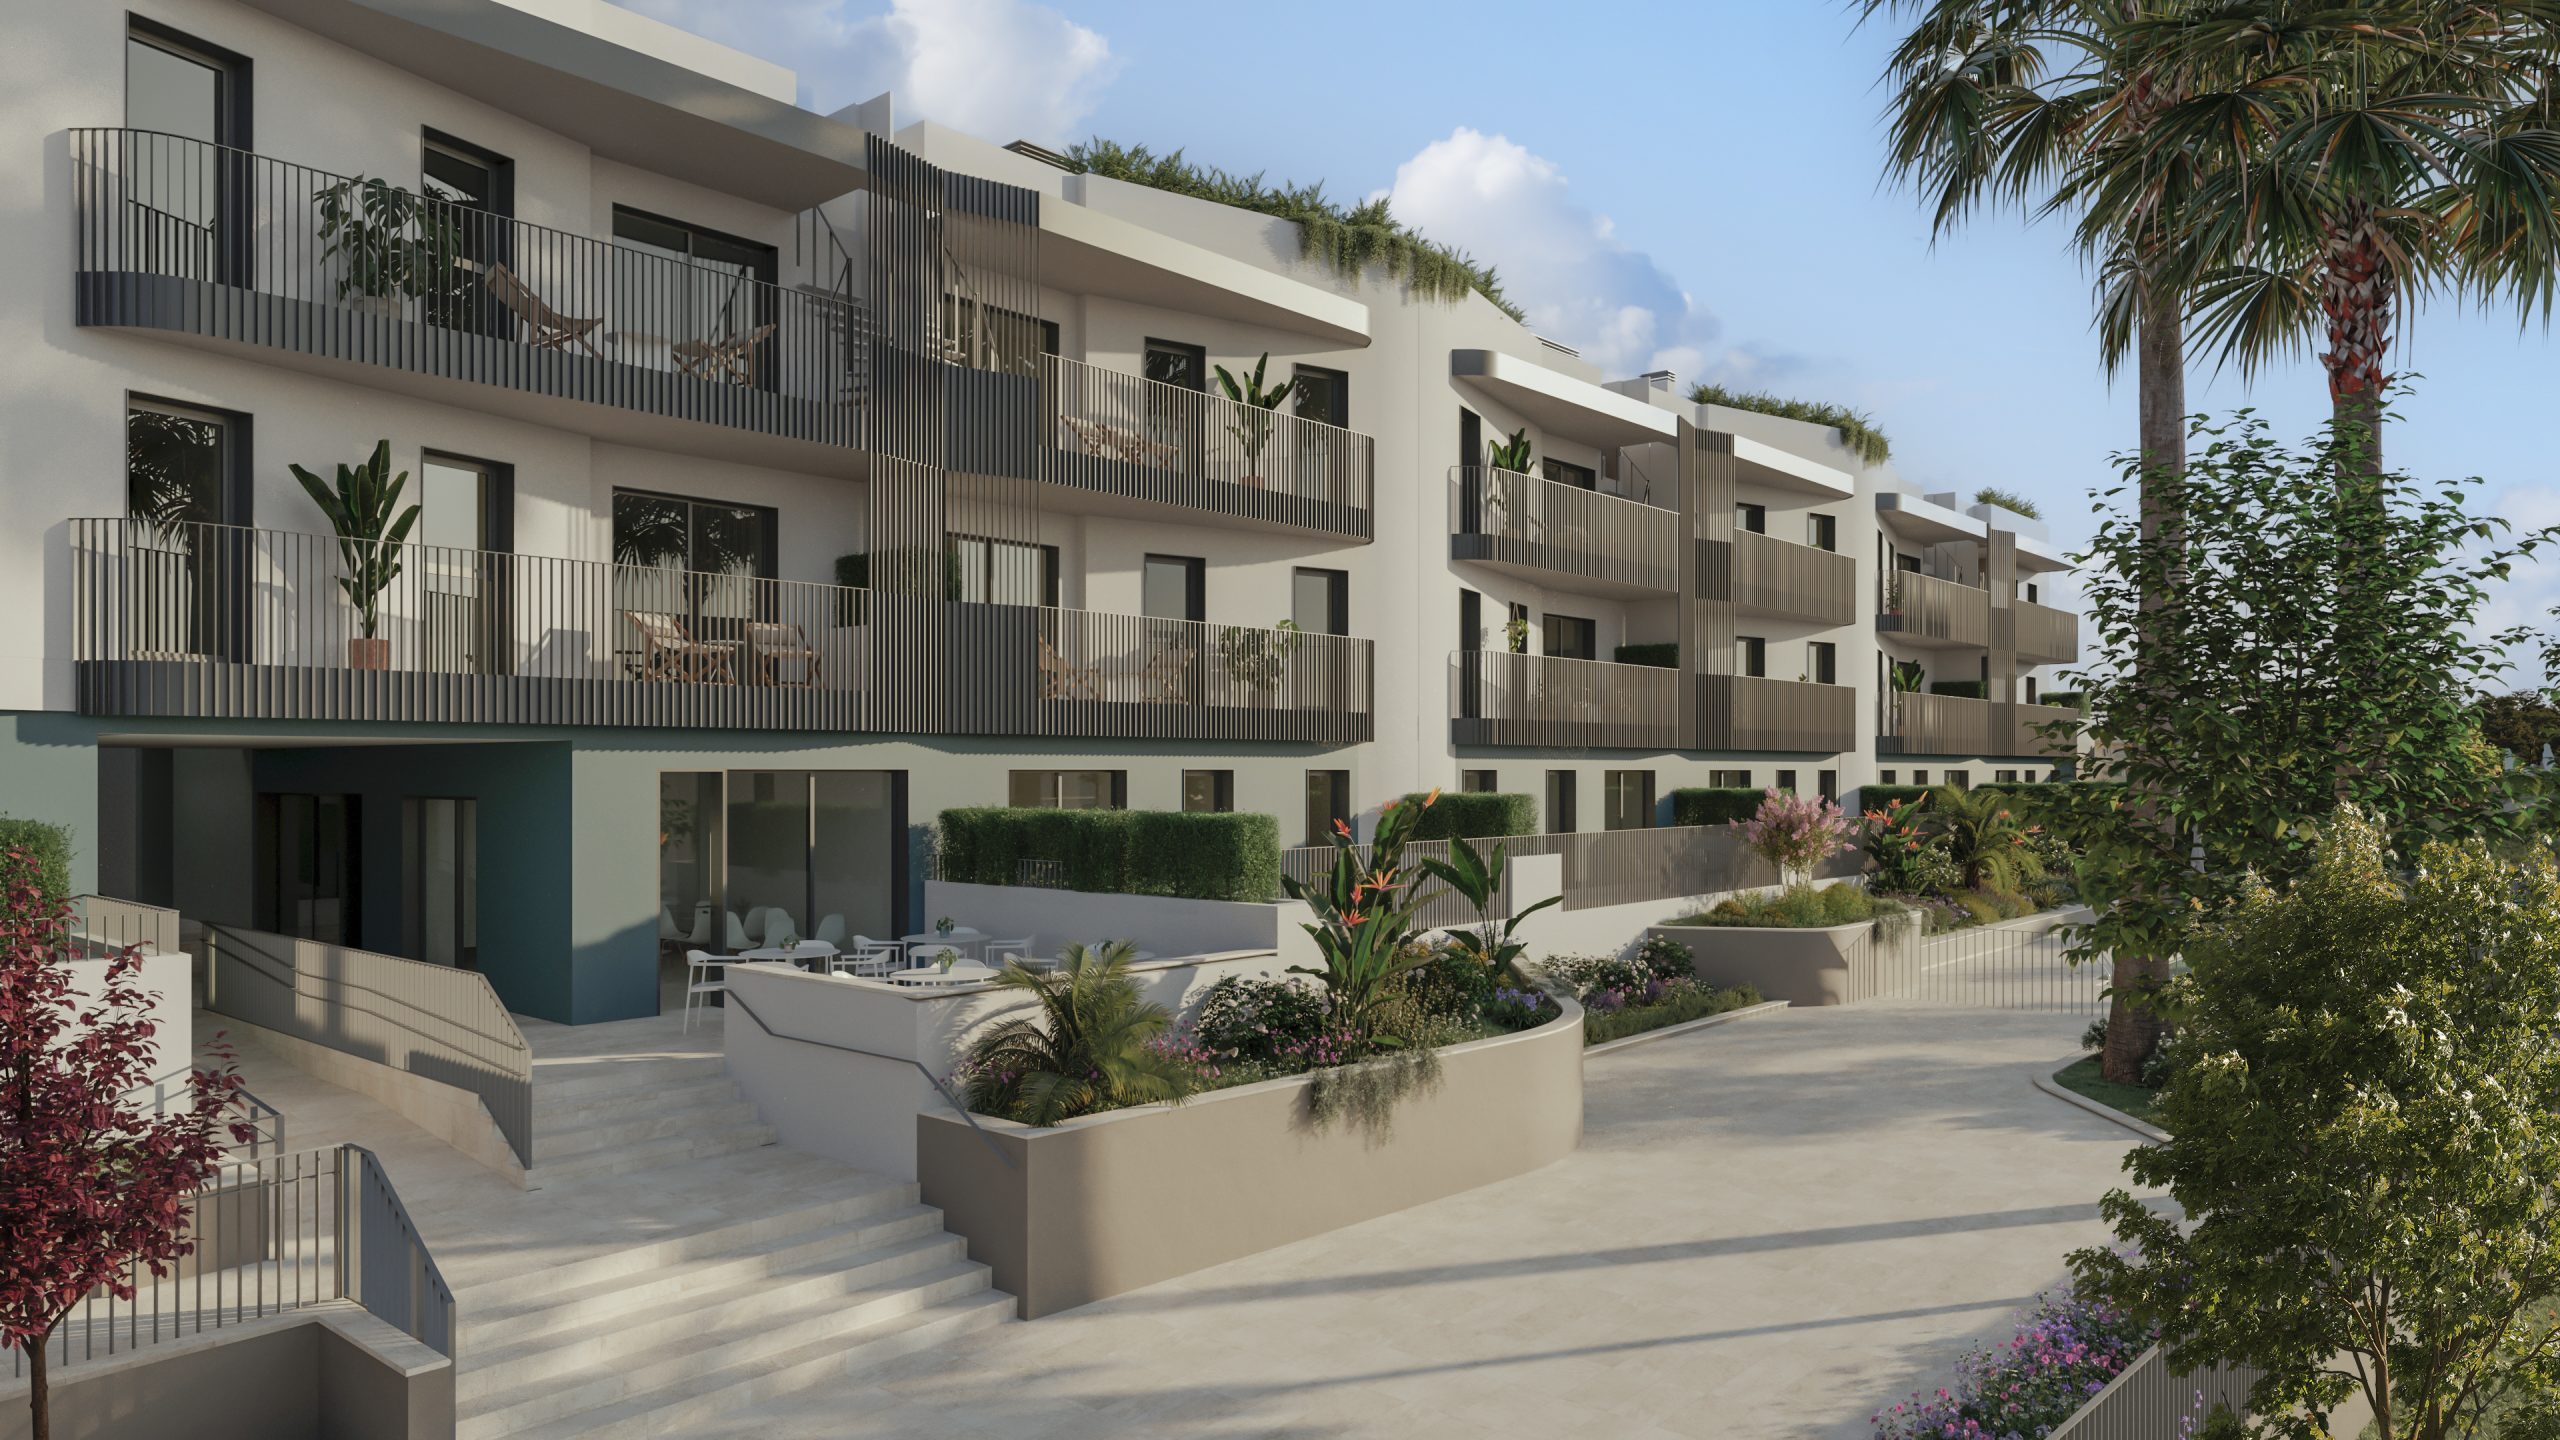 New build apartments in Palma, Mallorca